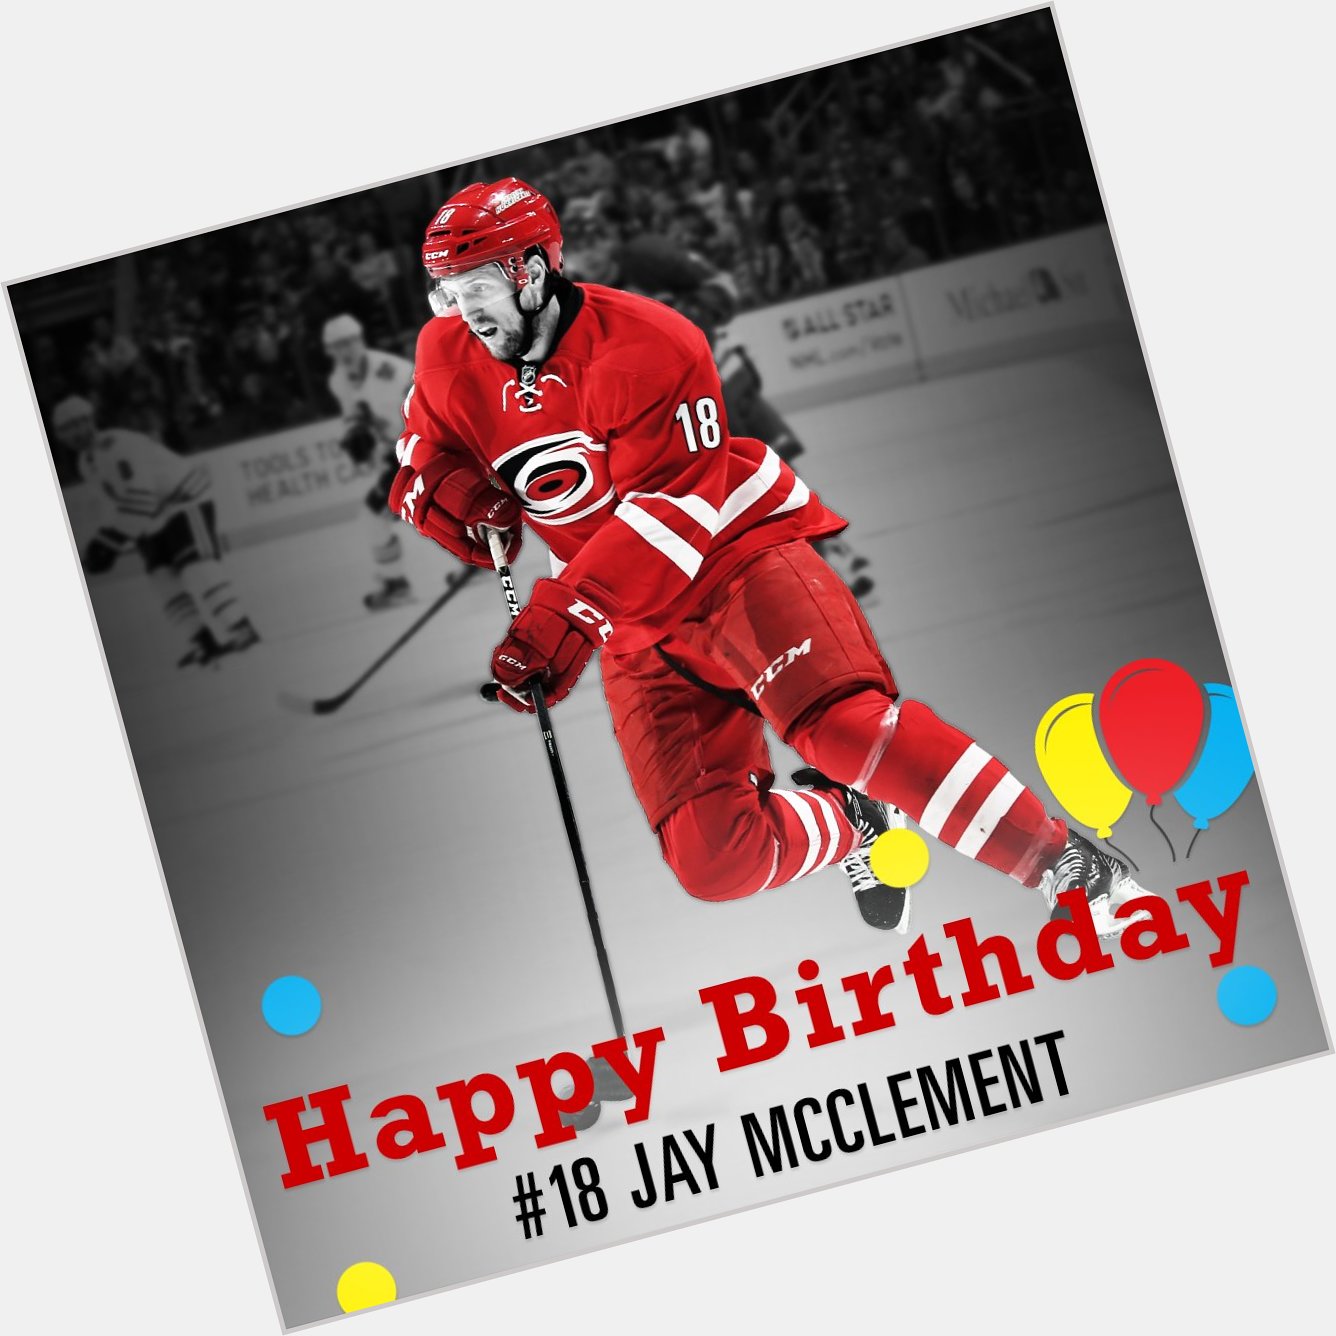 Help us wish Jay McClement a happy birthday! 